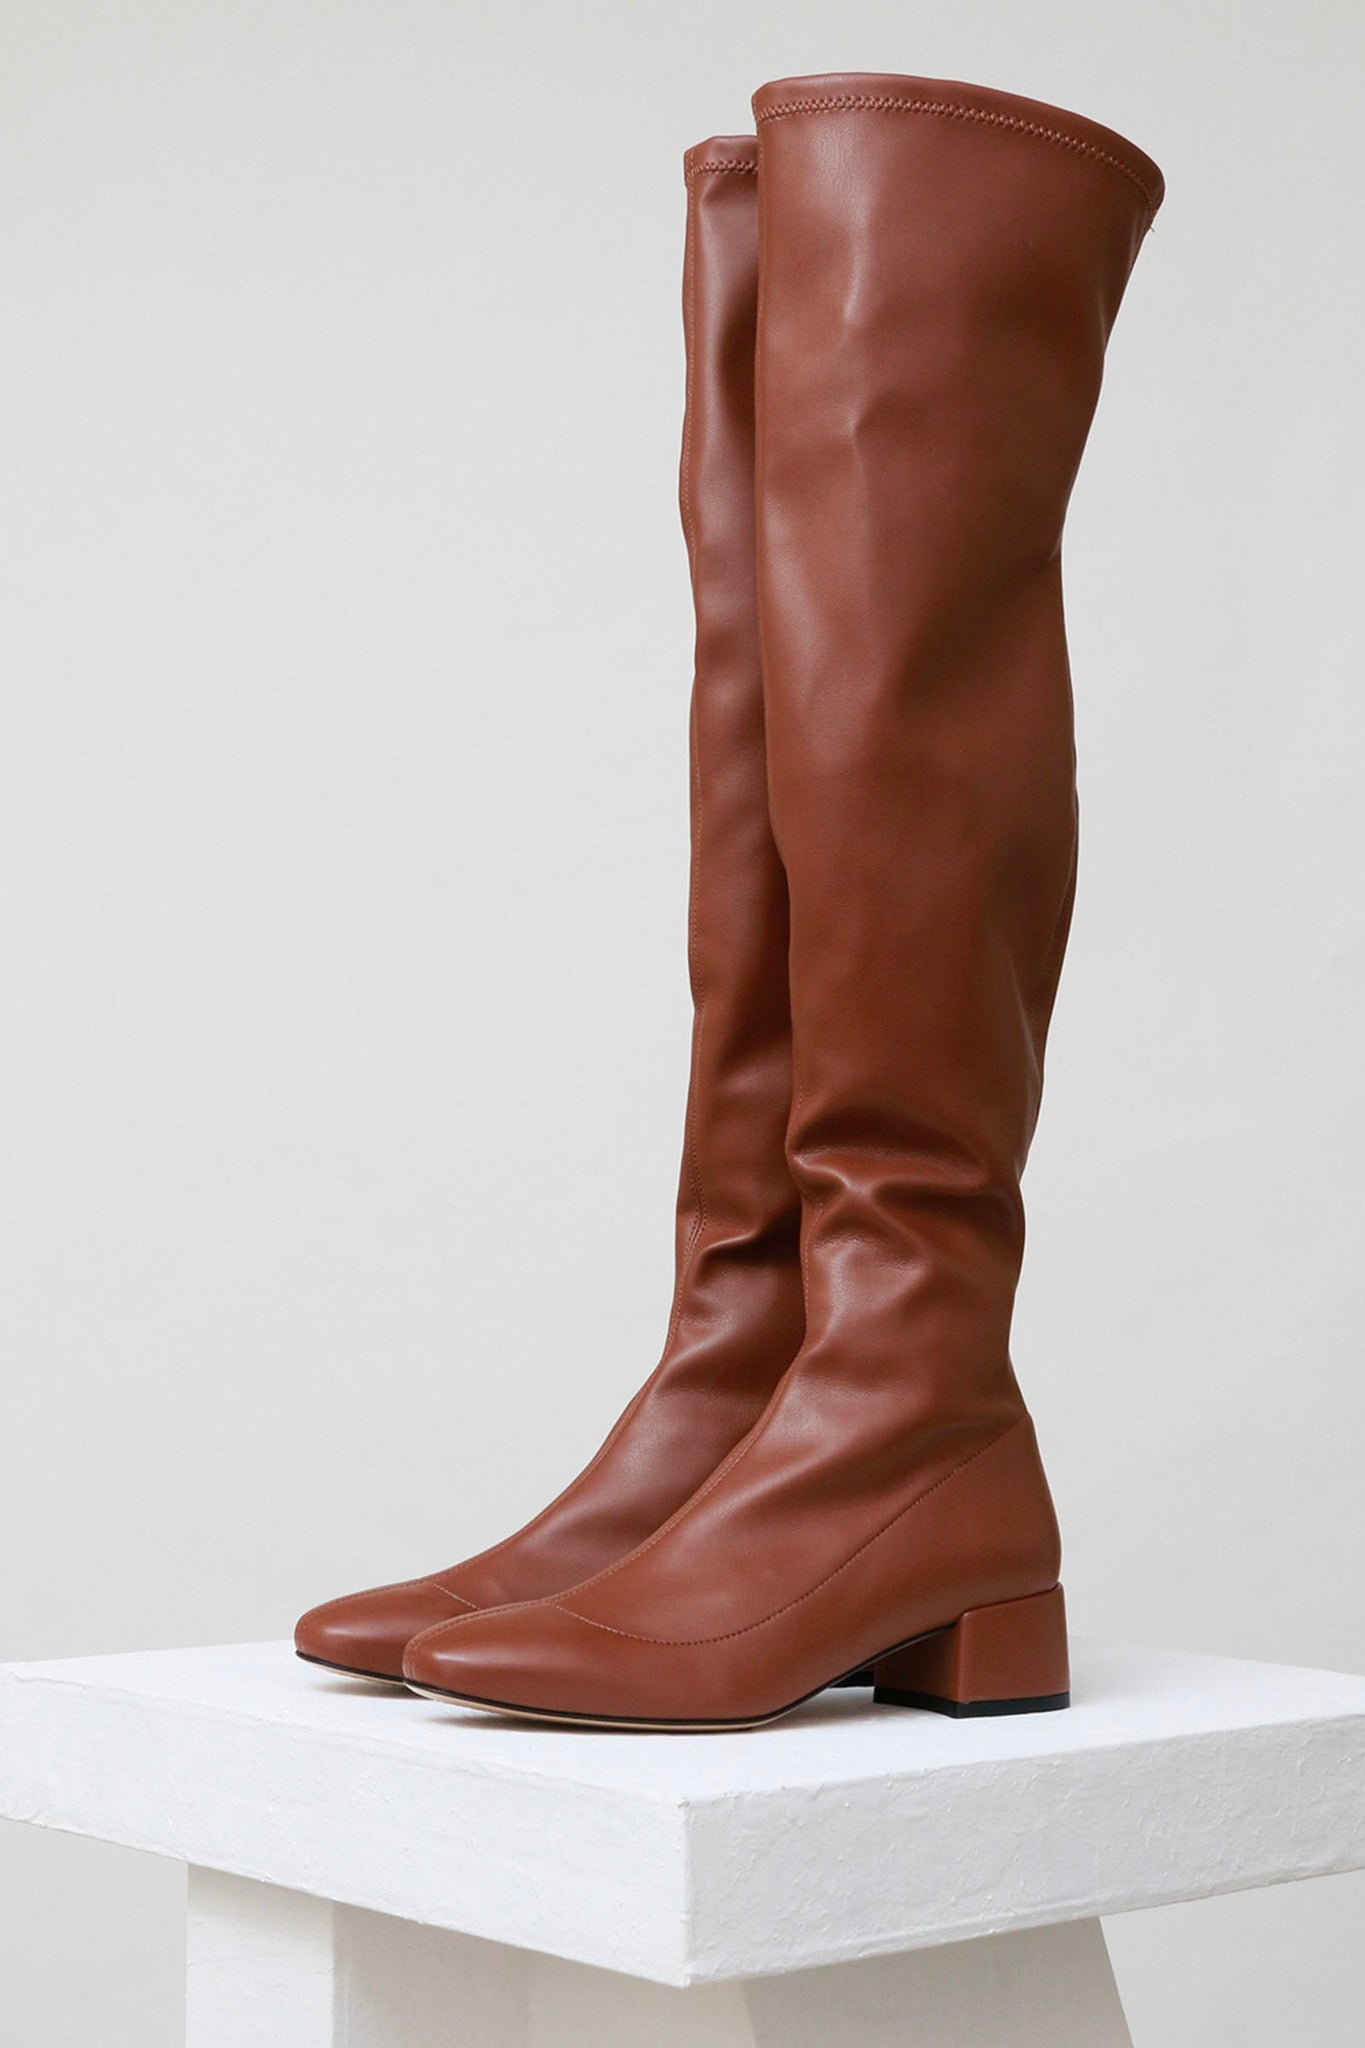 Souliers Martinez Shoes MONCLOA - Cognac Faux Stretch-Leather Thigh-High Boots 